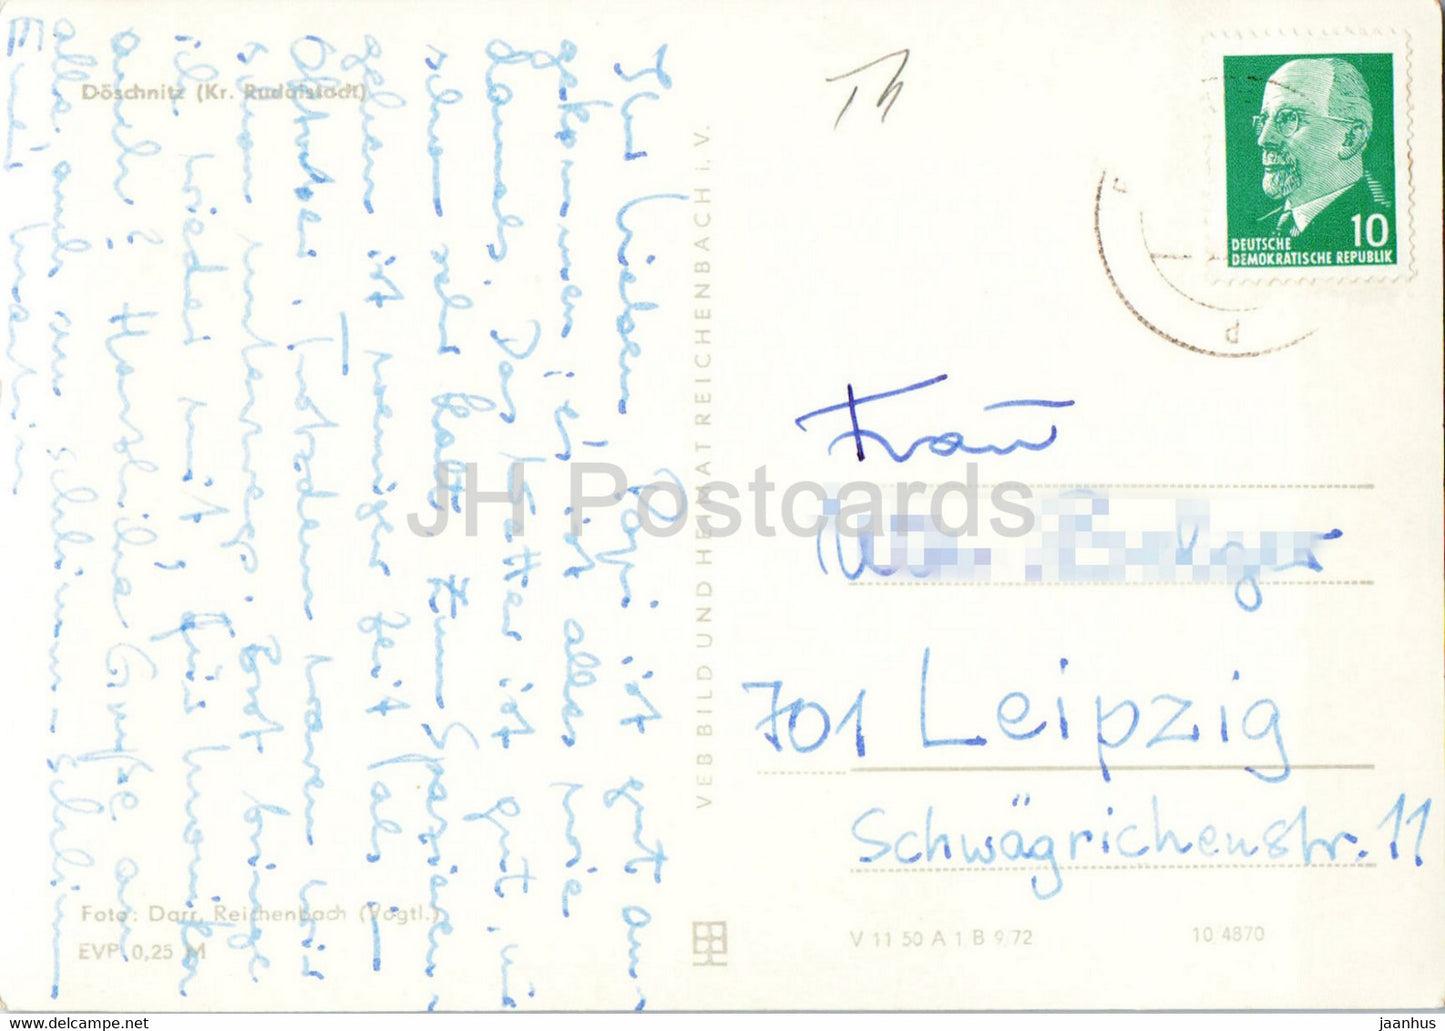 Doschnitz - Kr Rudolstadt - old postcard - Germany DDR - used